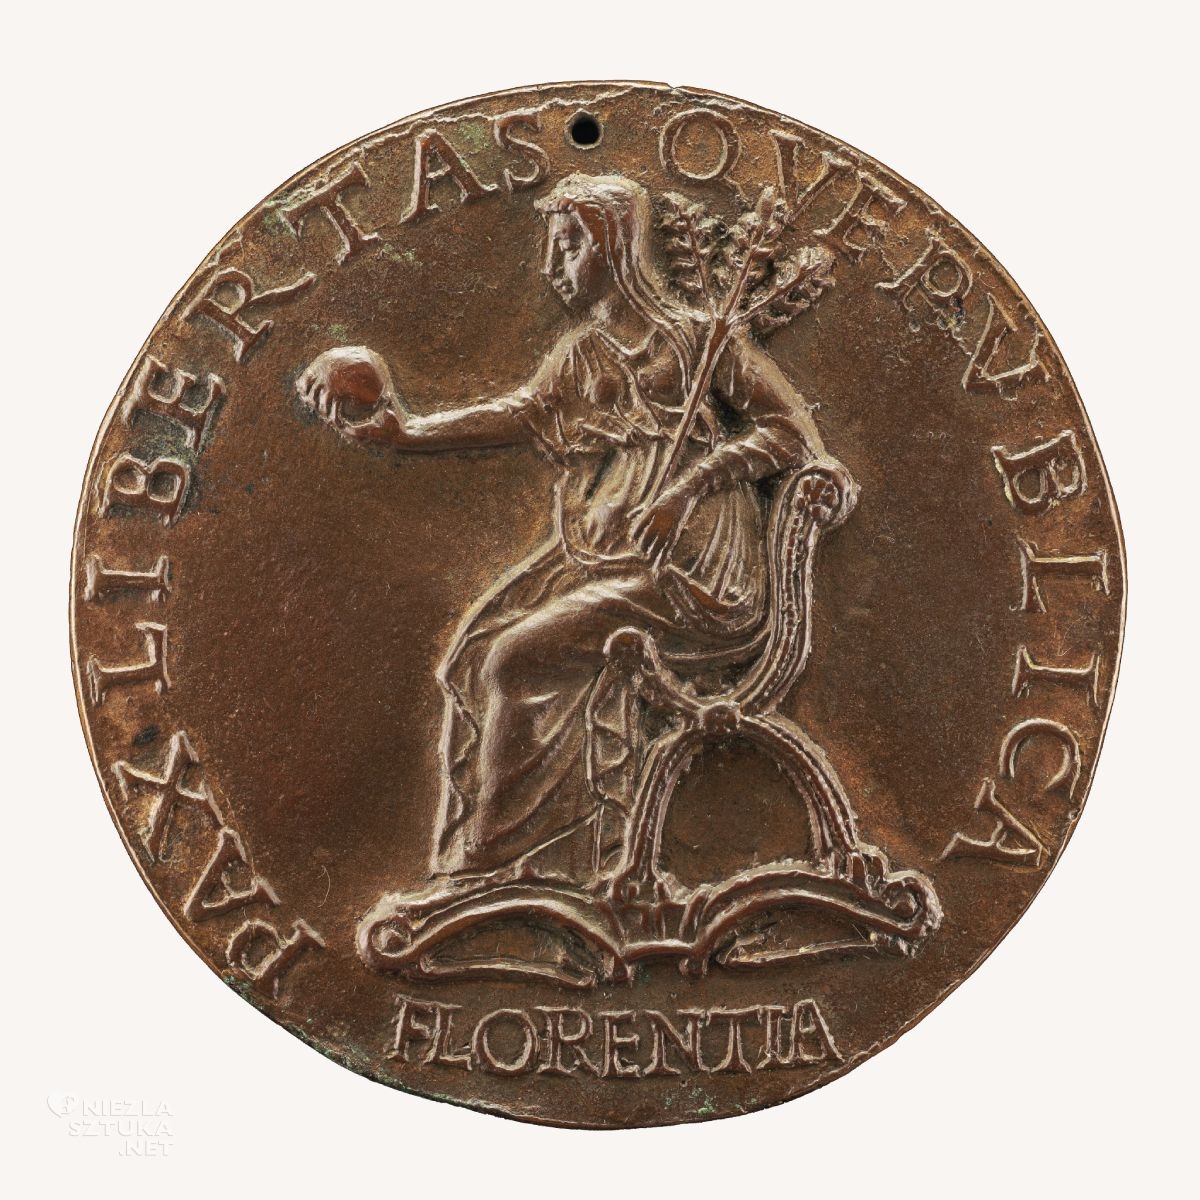 Kosma Medyceusz, Cosimo de Medici, medal, niezła sztuka